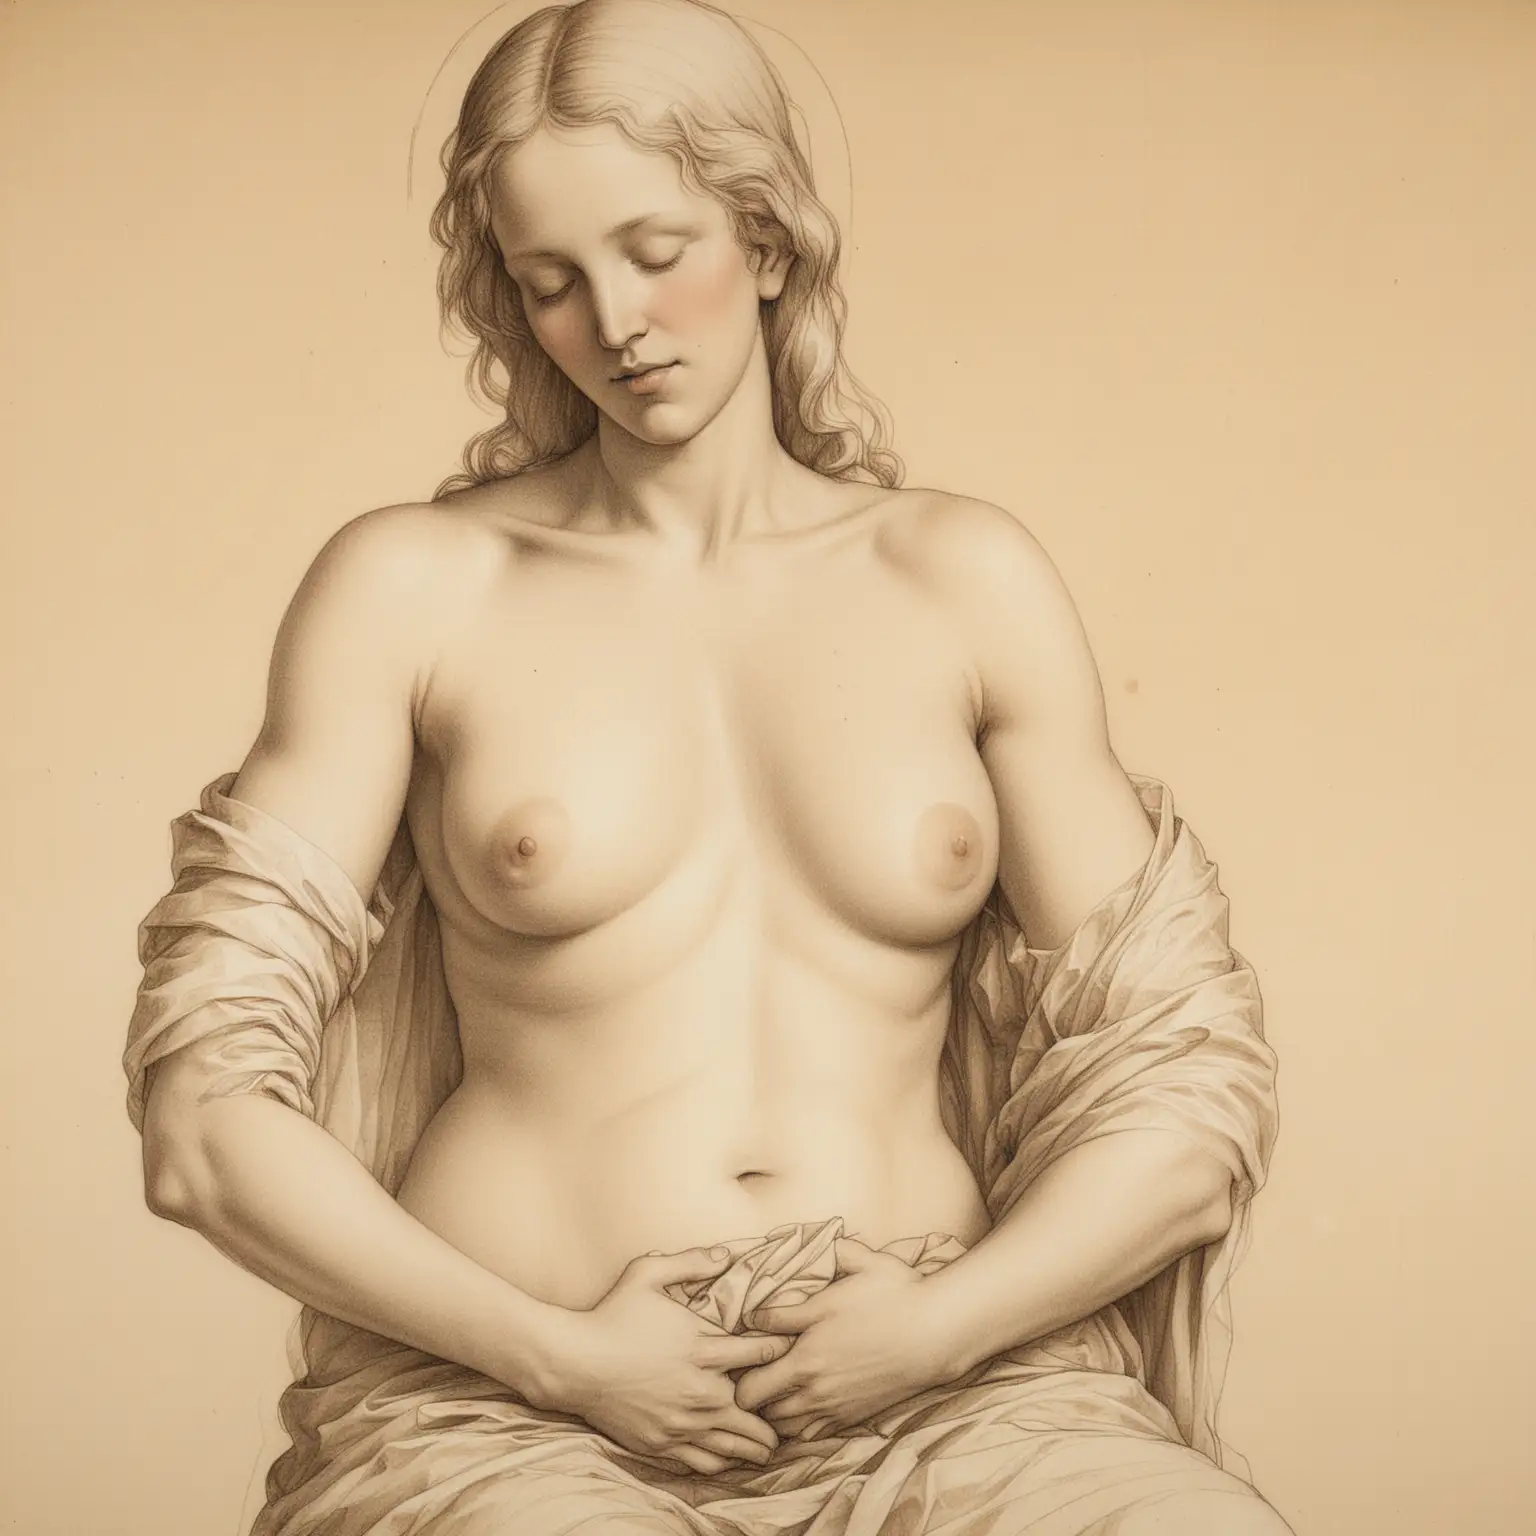 Saint Mary Breastfeeding Jesus in a Leonardo Da Vinci Inspired Apocryphal Sketch